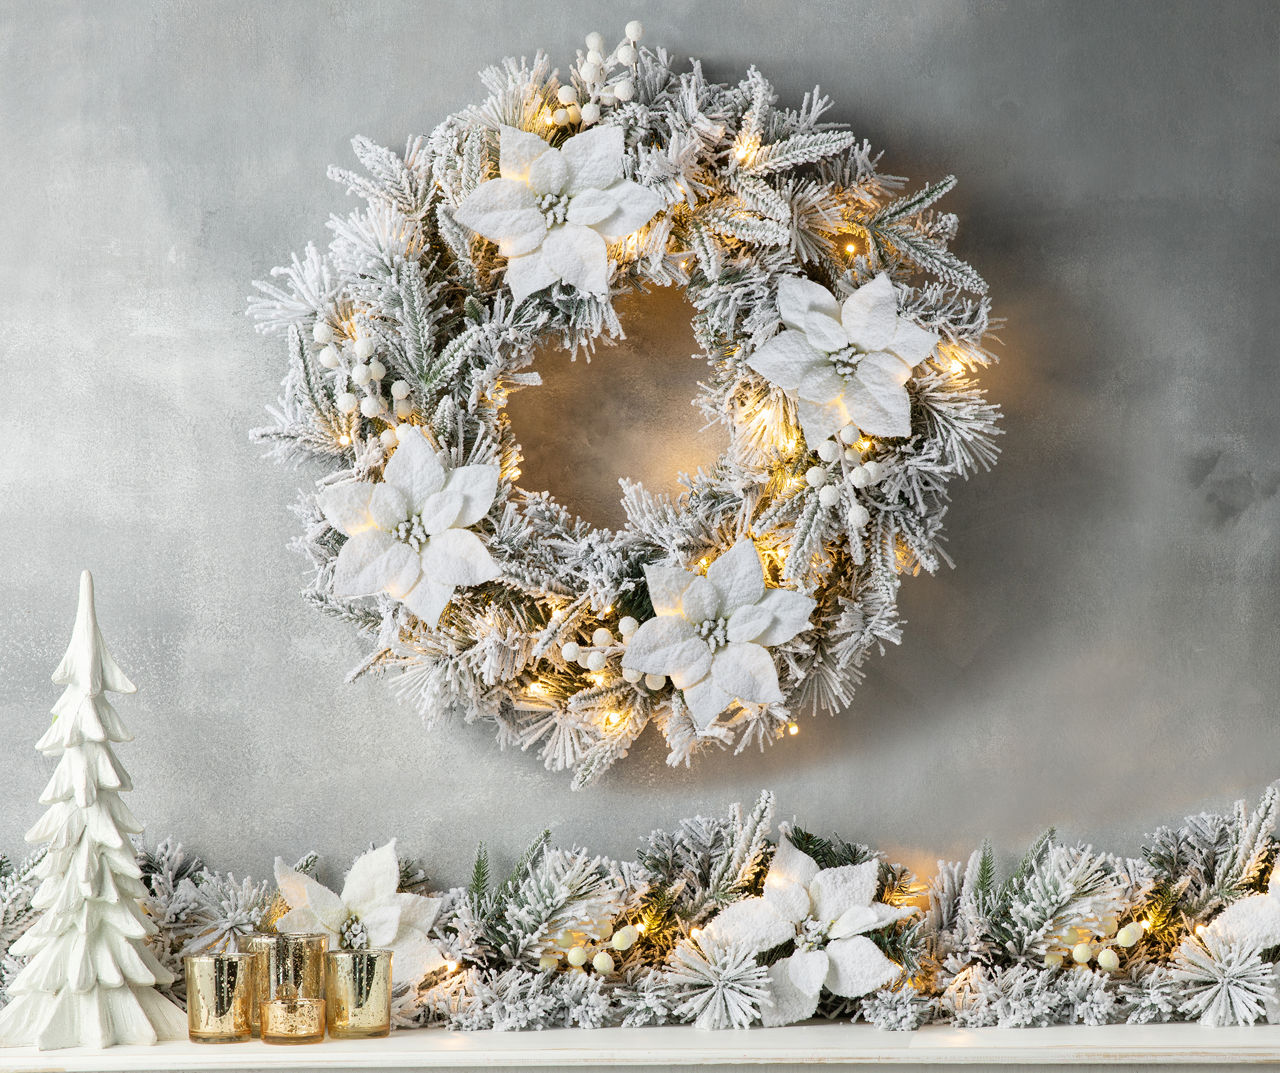 Glitzhome White Poinsettia 3-Piece Pre-Lit LED Wreath & Garland Set